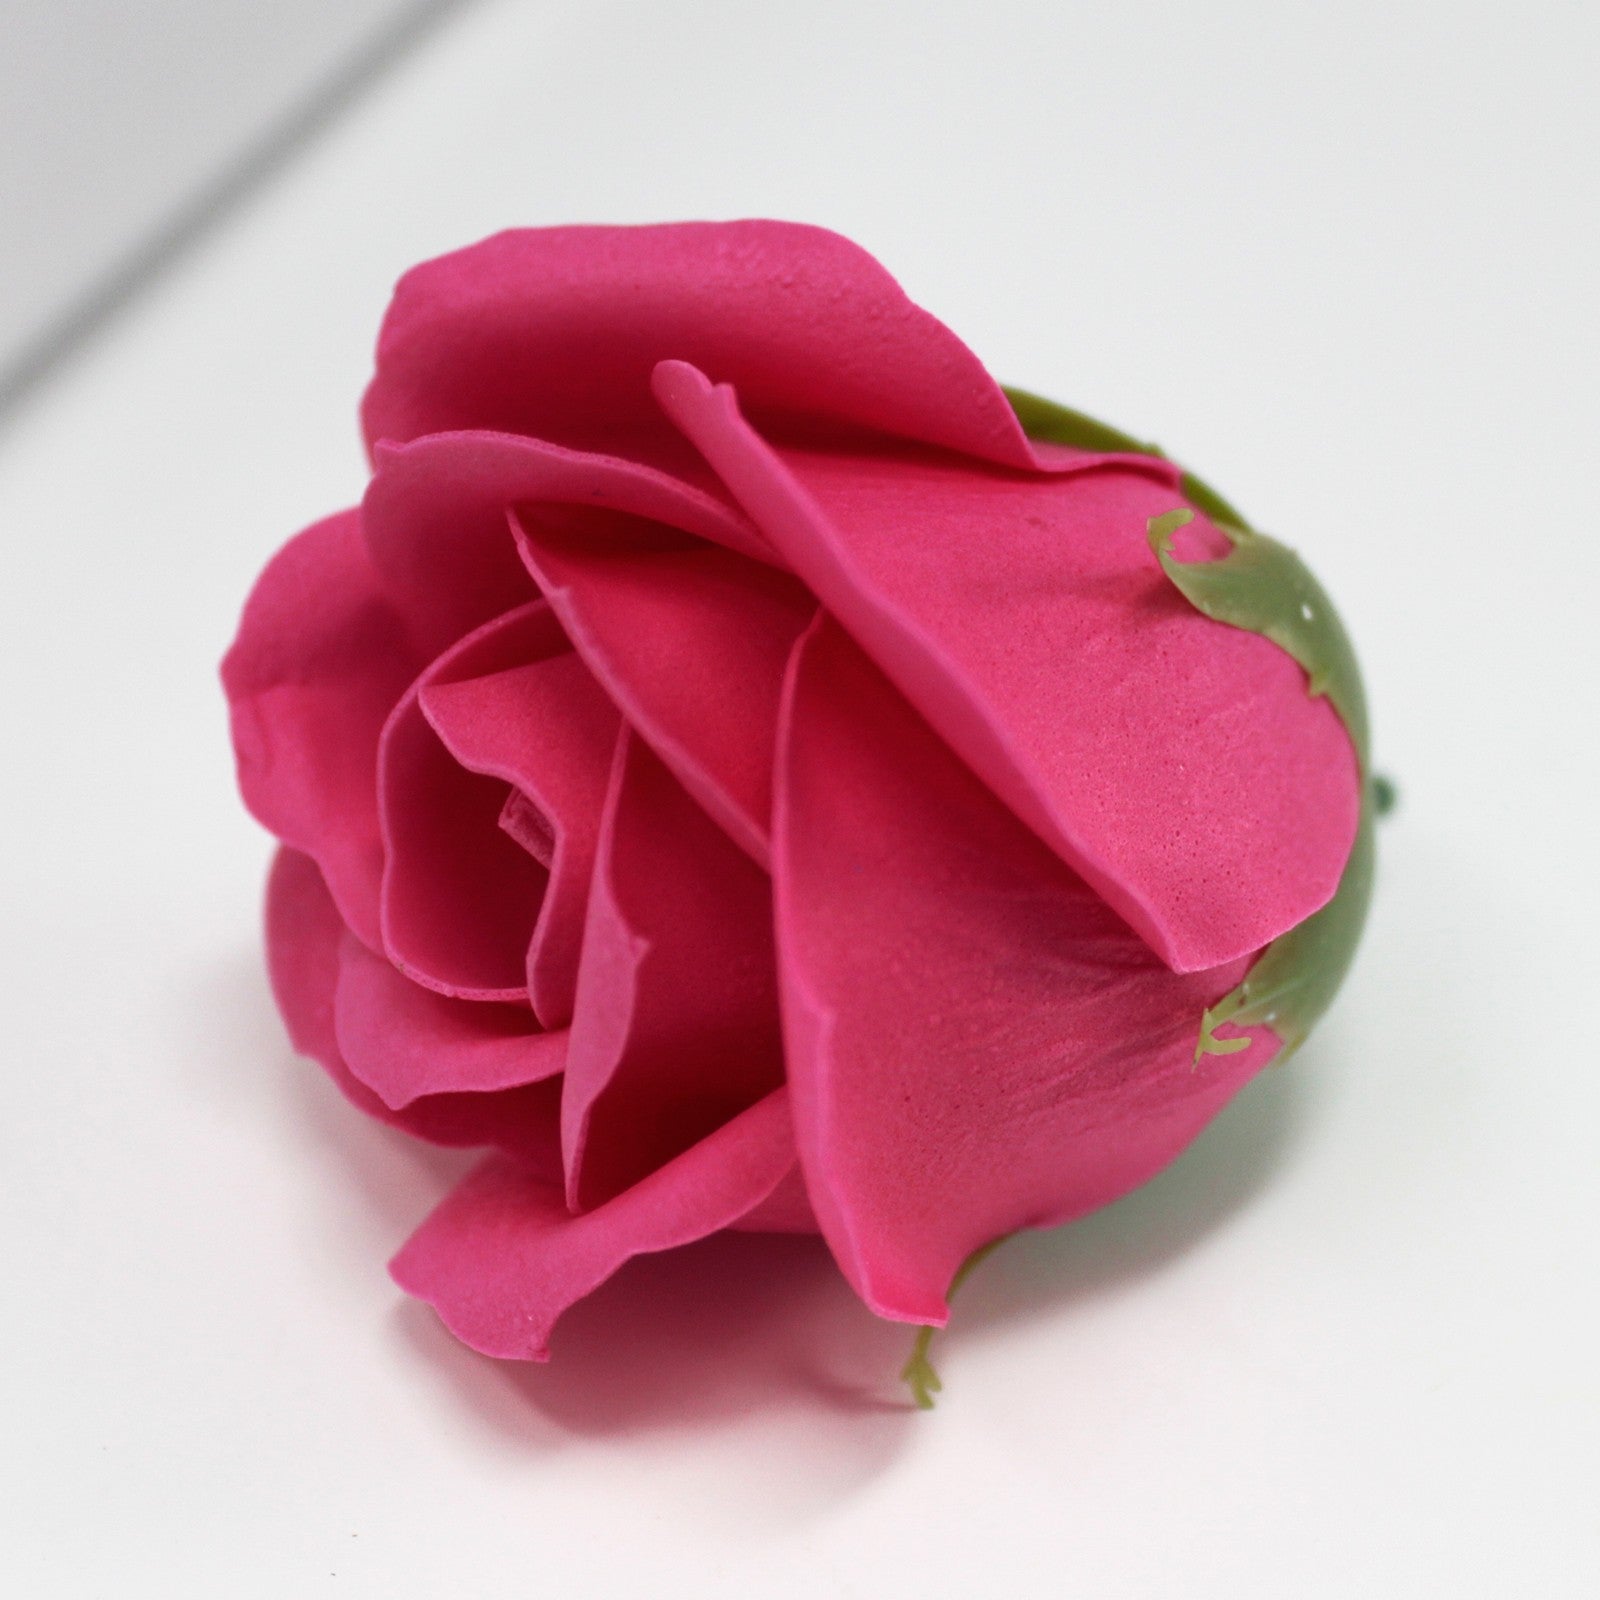 View Craft Soap Flowers Med Rose Rose information